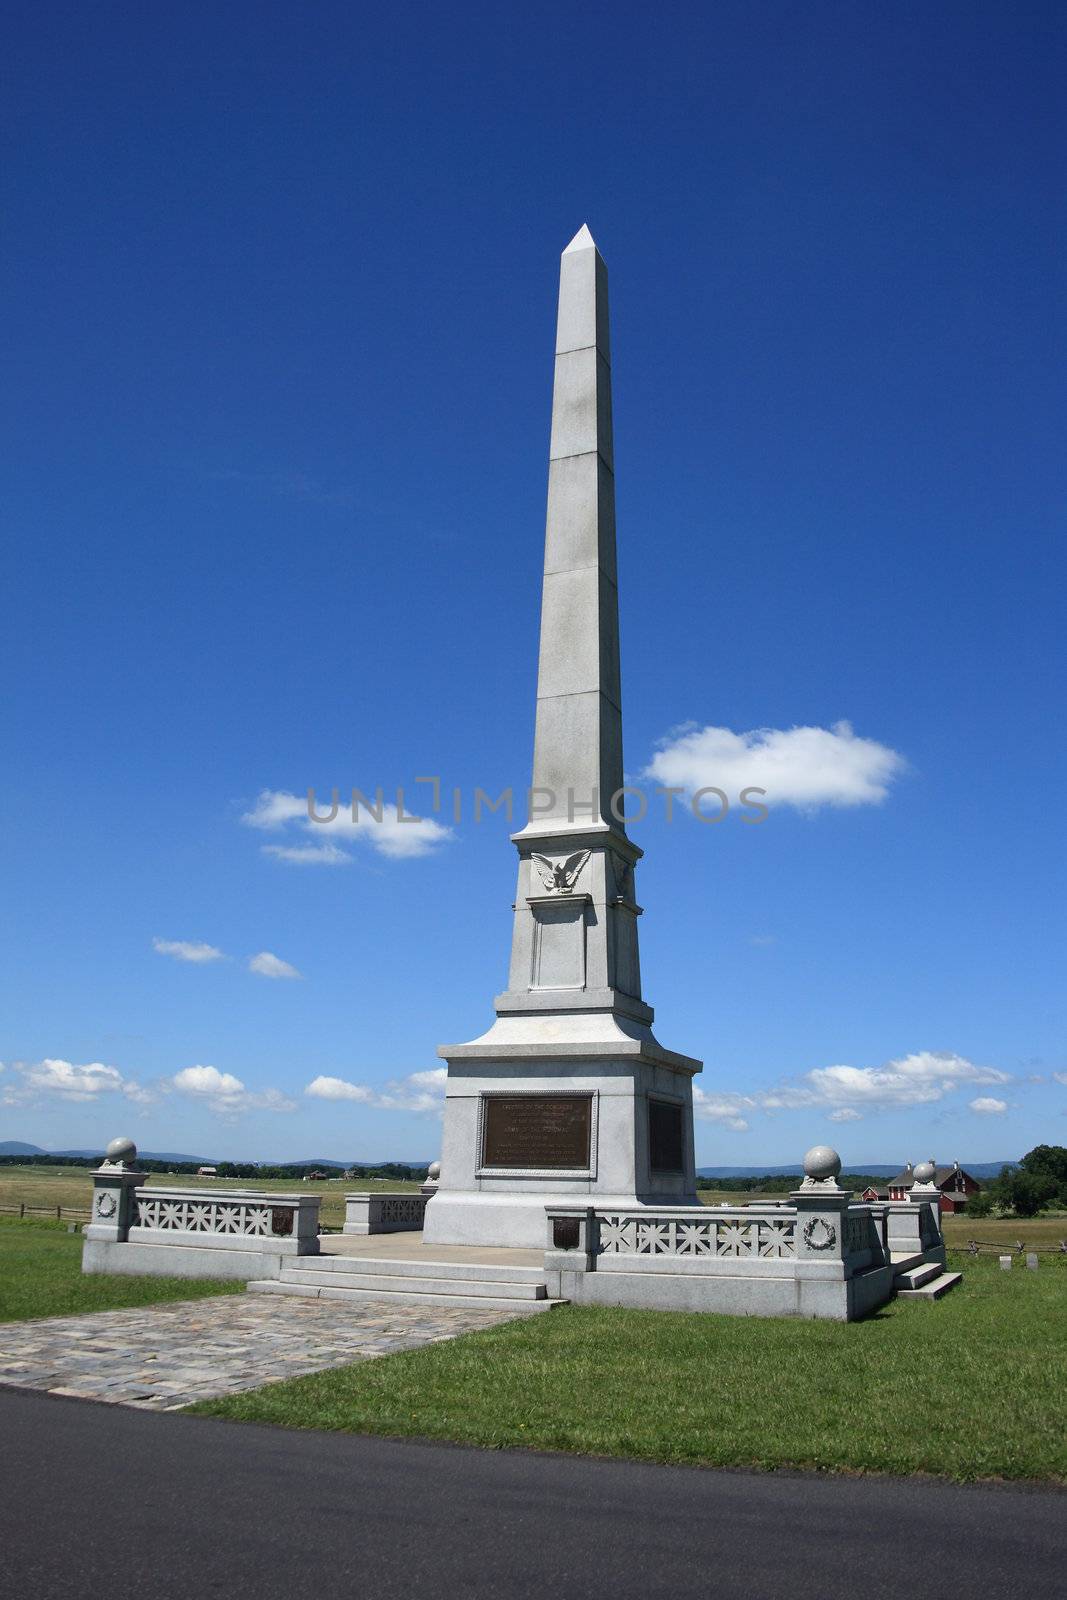 Gettysburg Battlefield by Ffooter